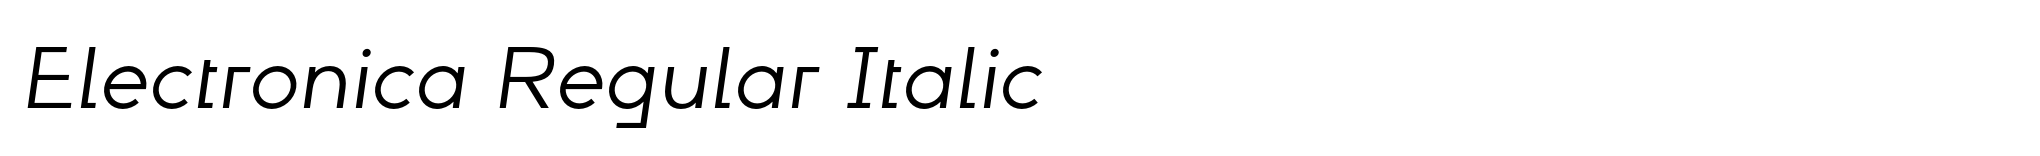 Electronica Regular Italic image